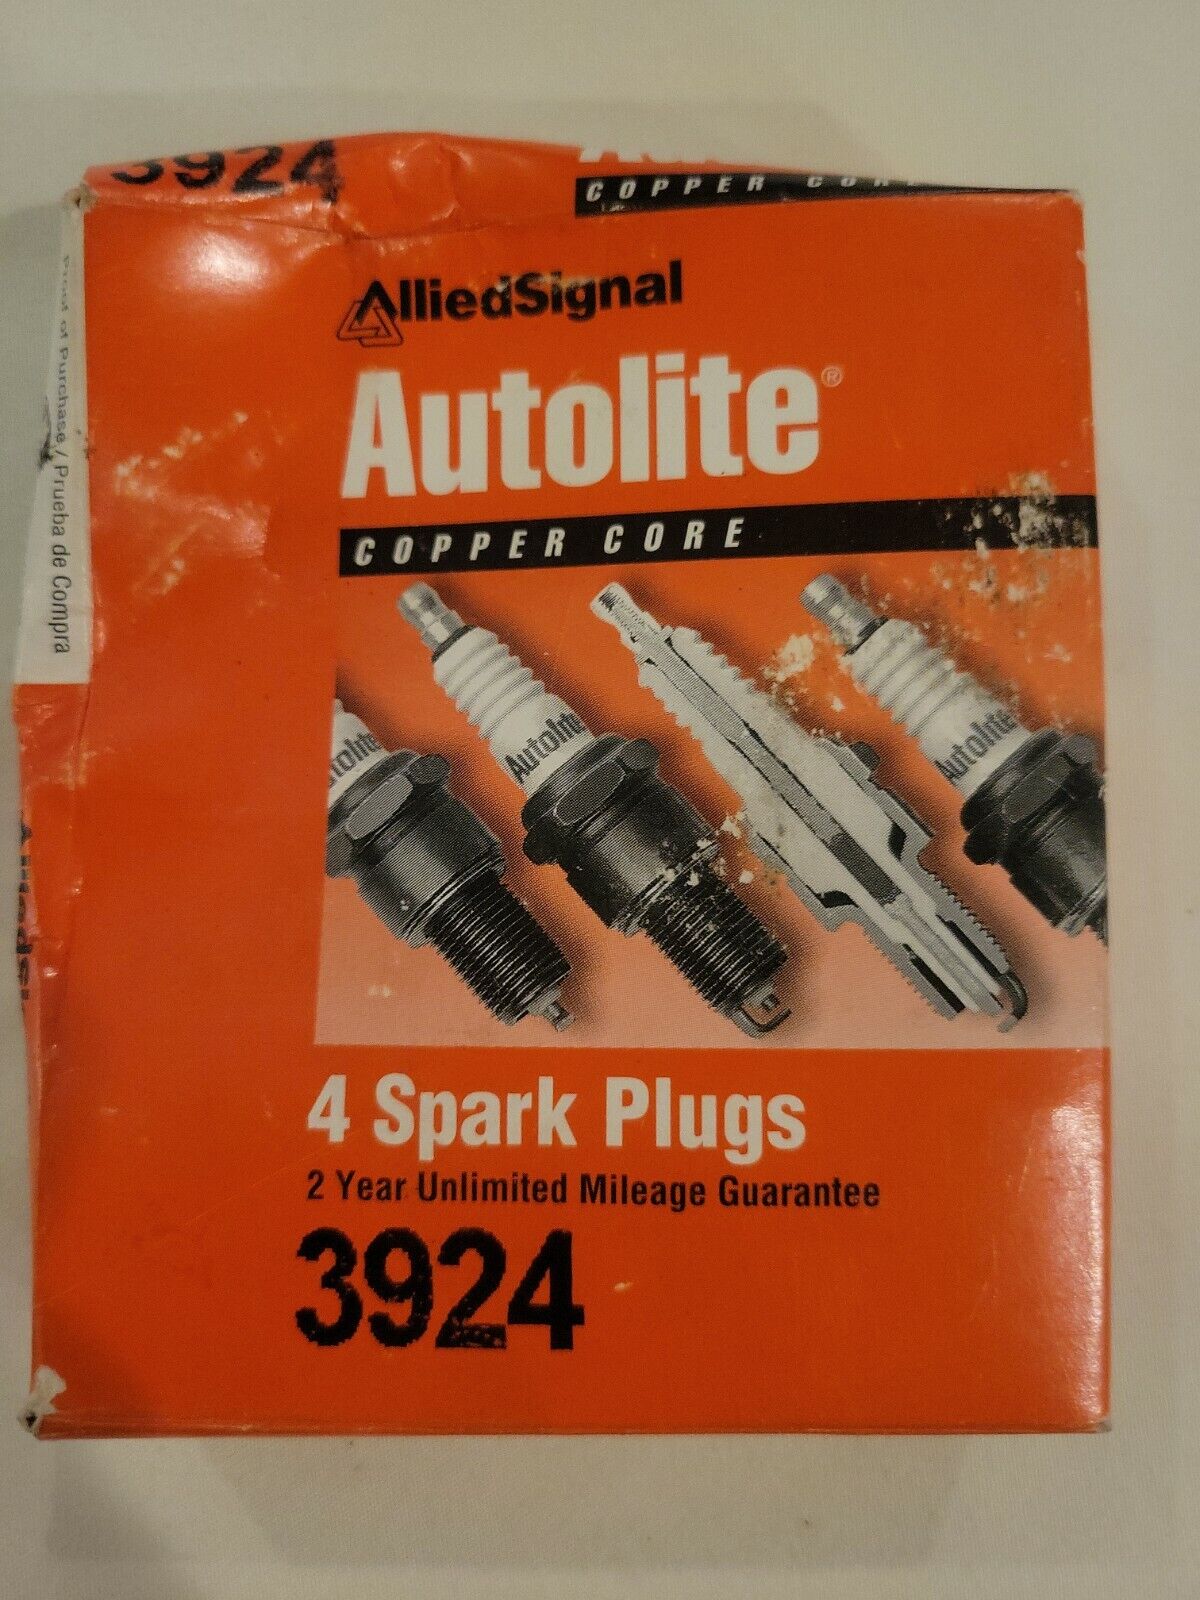 1996 NEW NOS Autolite Copper Core Spark Plugs pack of 4 Four  #3924 DAMAGED BOX